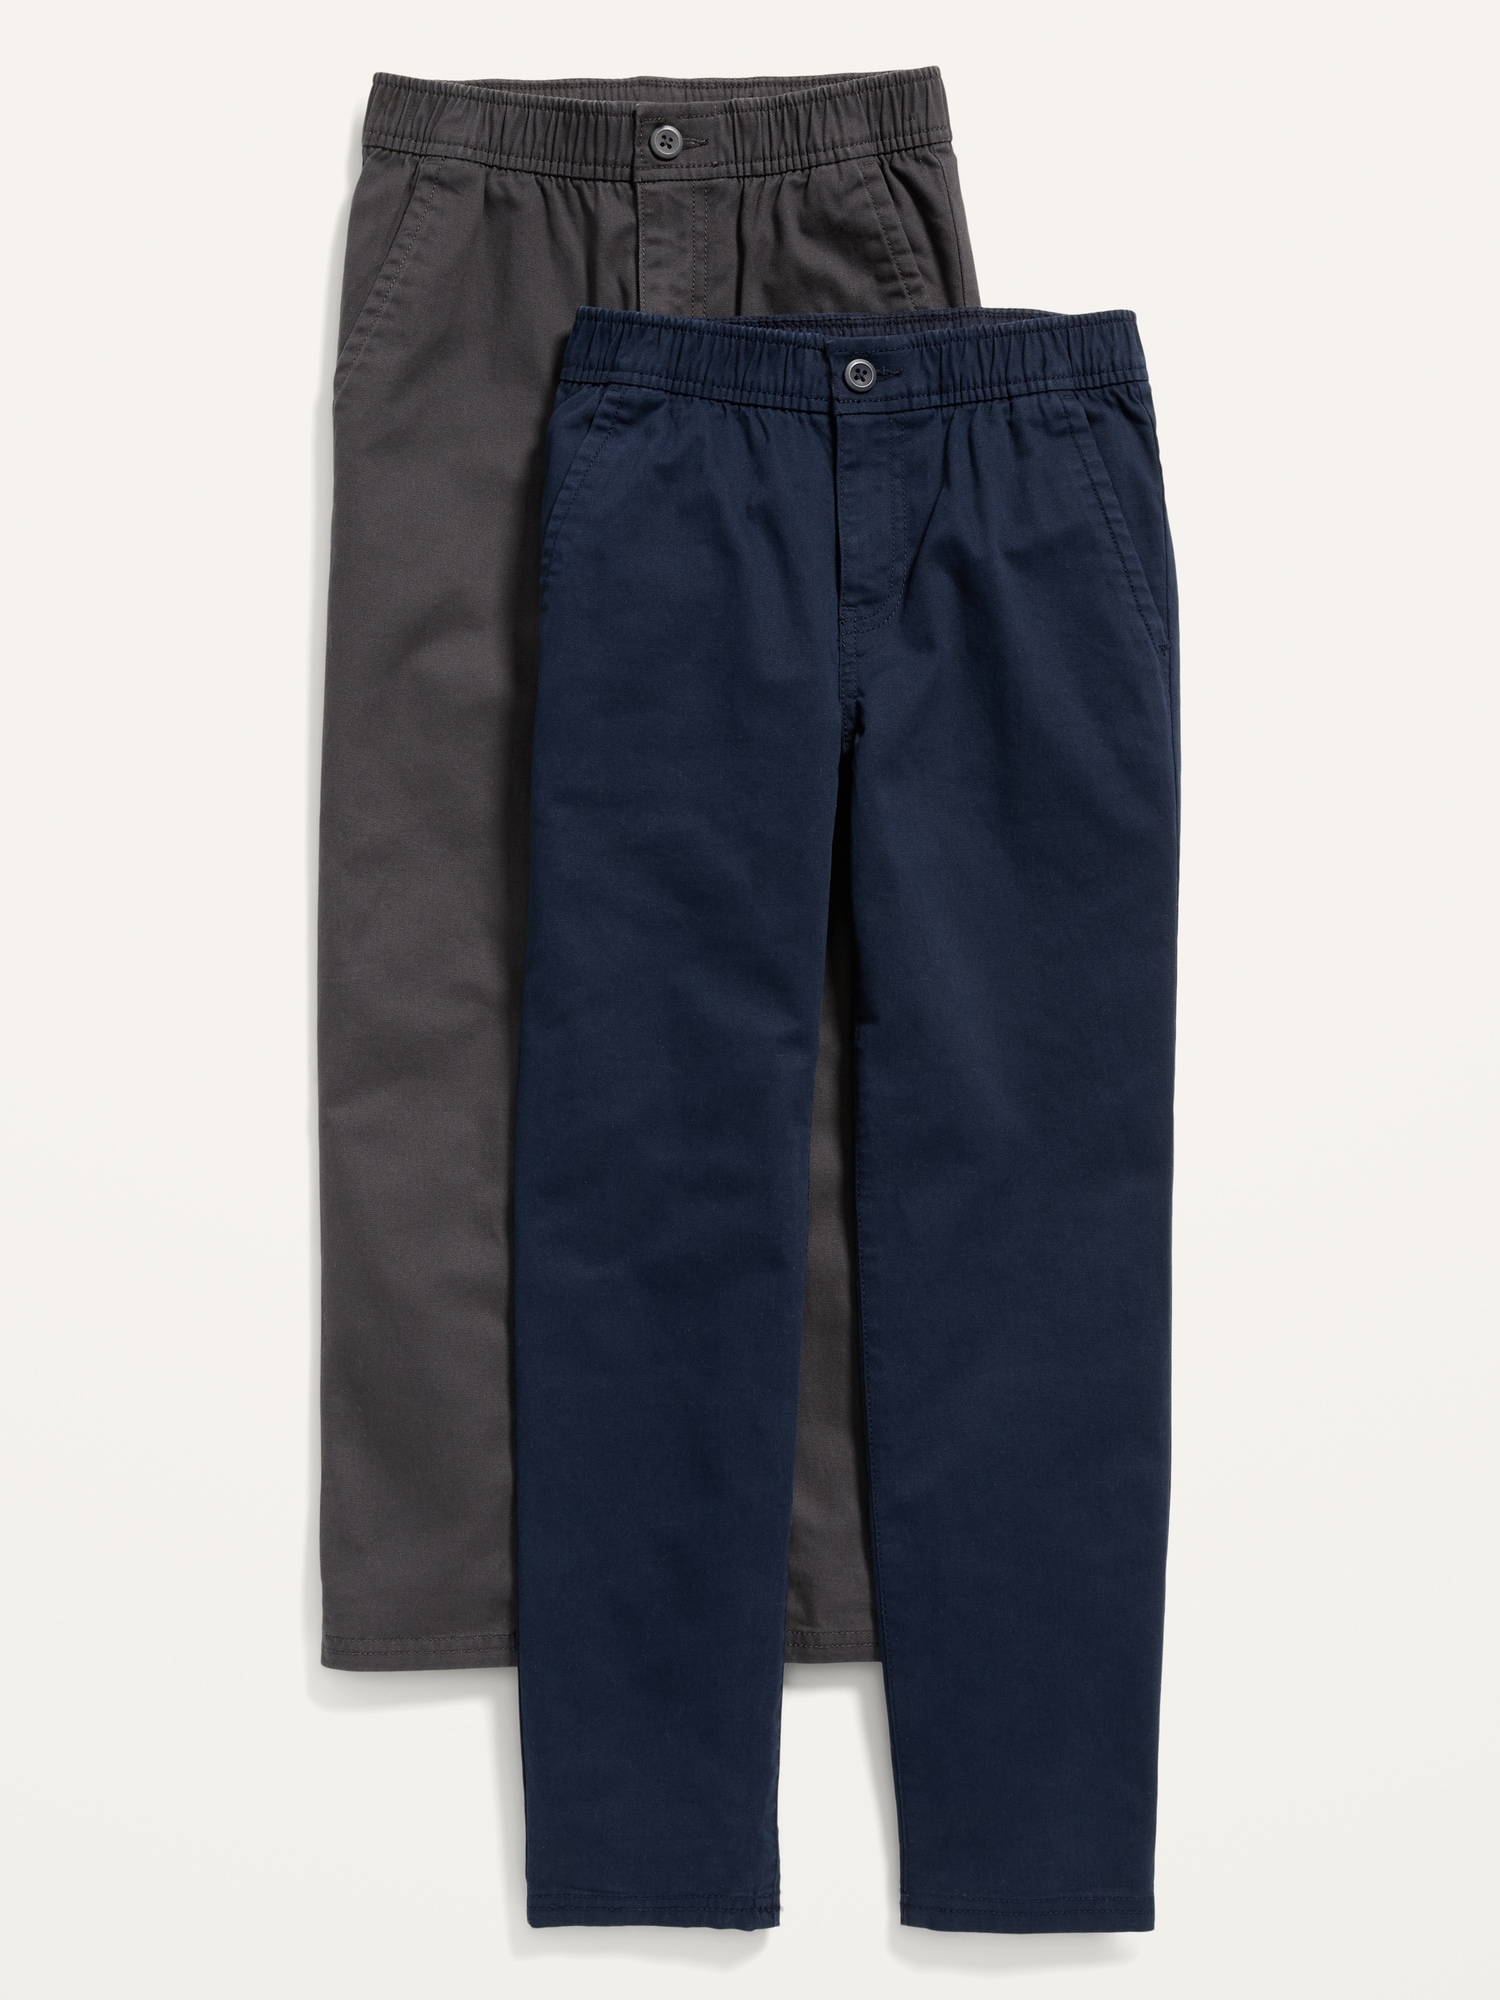 Pantalon Chino Recto Old Navy | Old Navy - Old Navy MX | Tienda en línea